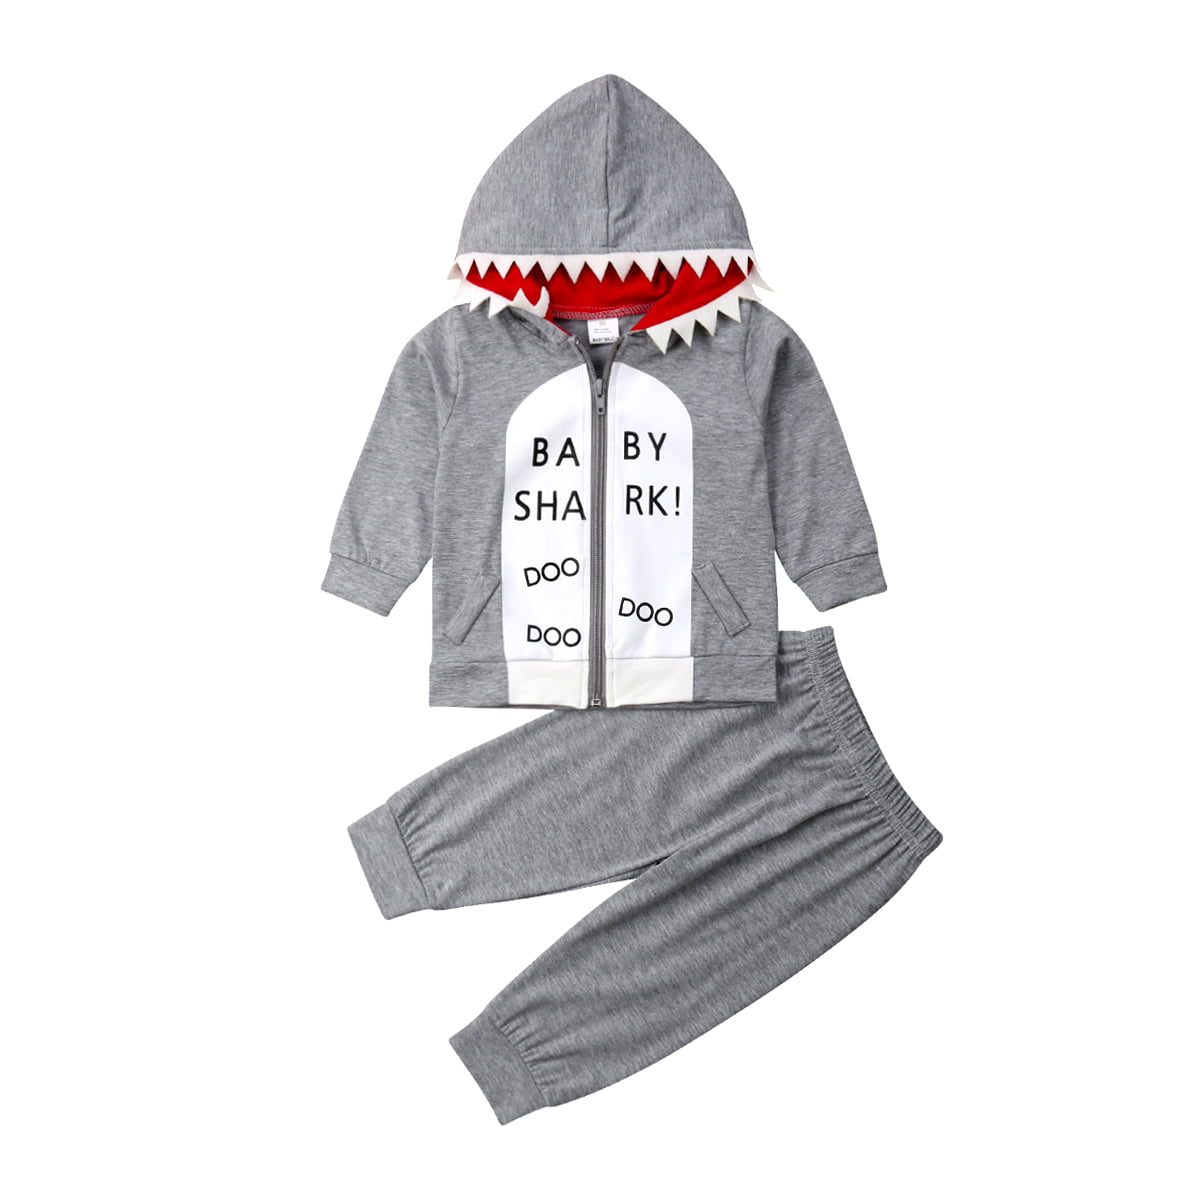 Unisex Baby Autumn Winter Shark Hooded Sweatshirt Infant Boys Girls Hoodies with Kangaroo Muff Pockets& Shark Fin 